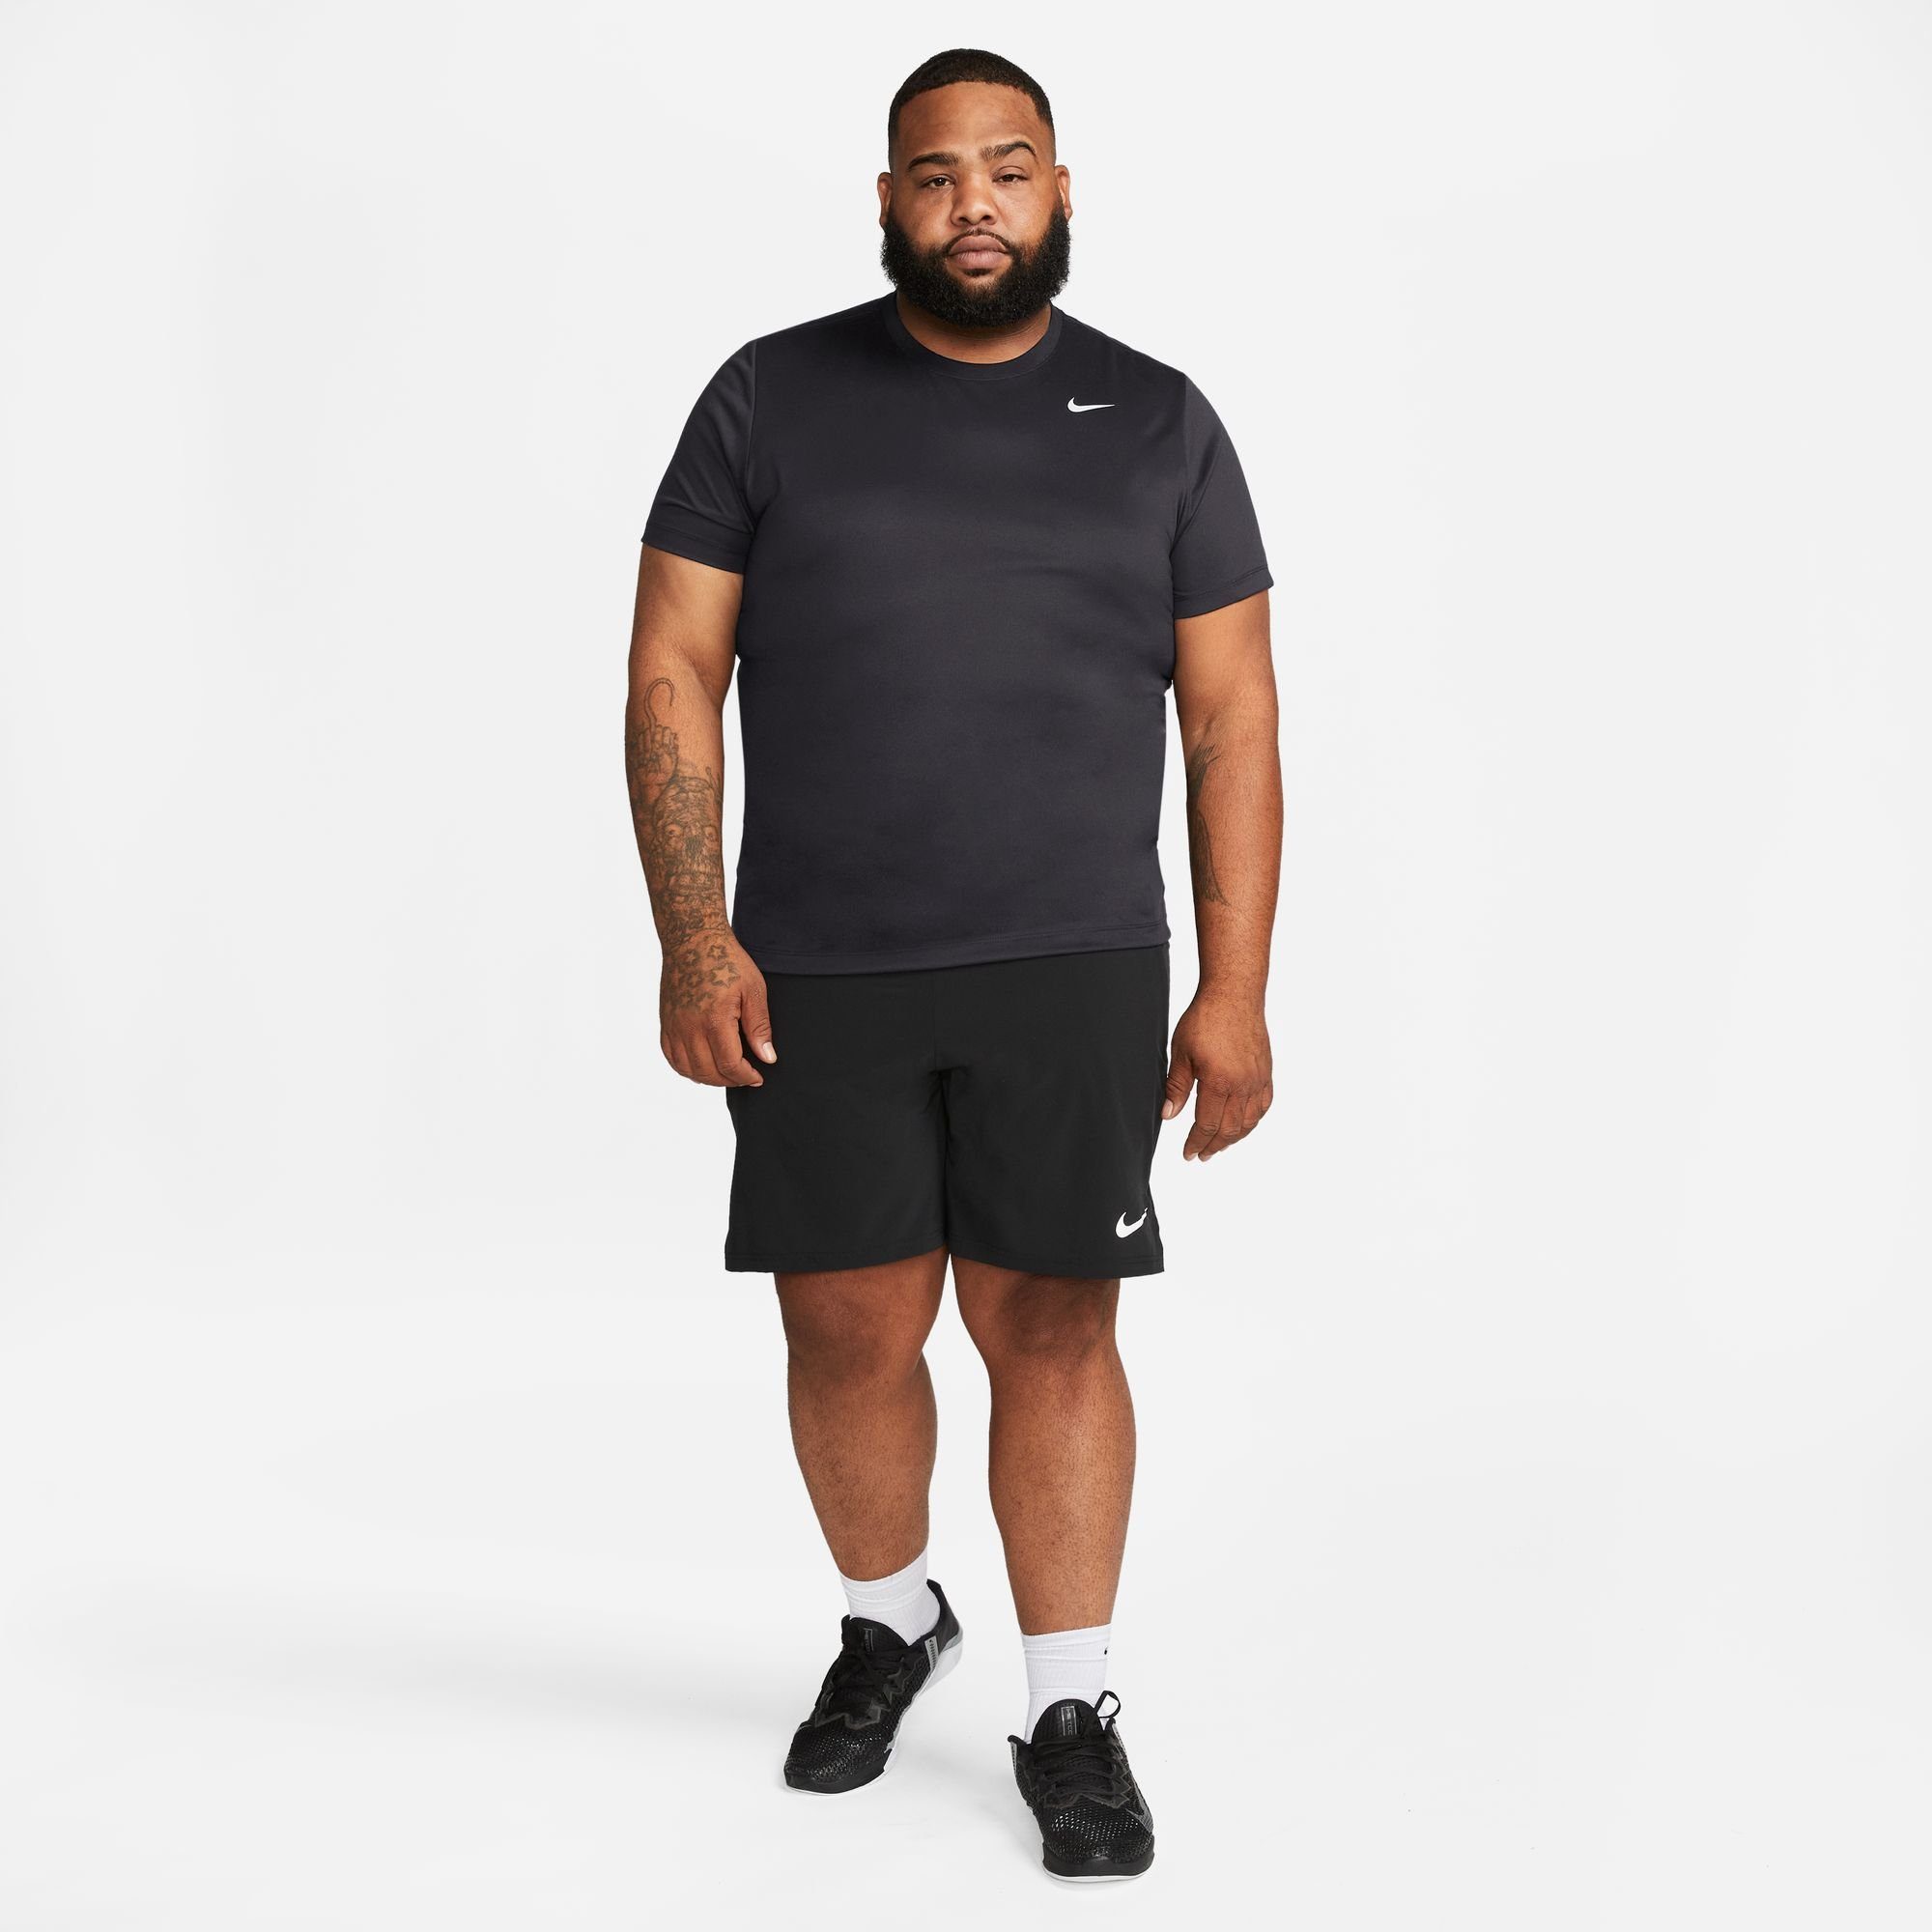 MEN'S BLACK/MATTE SILVER Trainingsshirt Nike FITNESS LEGEND DRI-FIT T-SHIRT